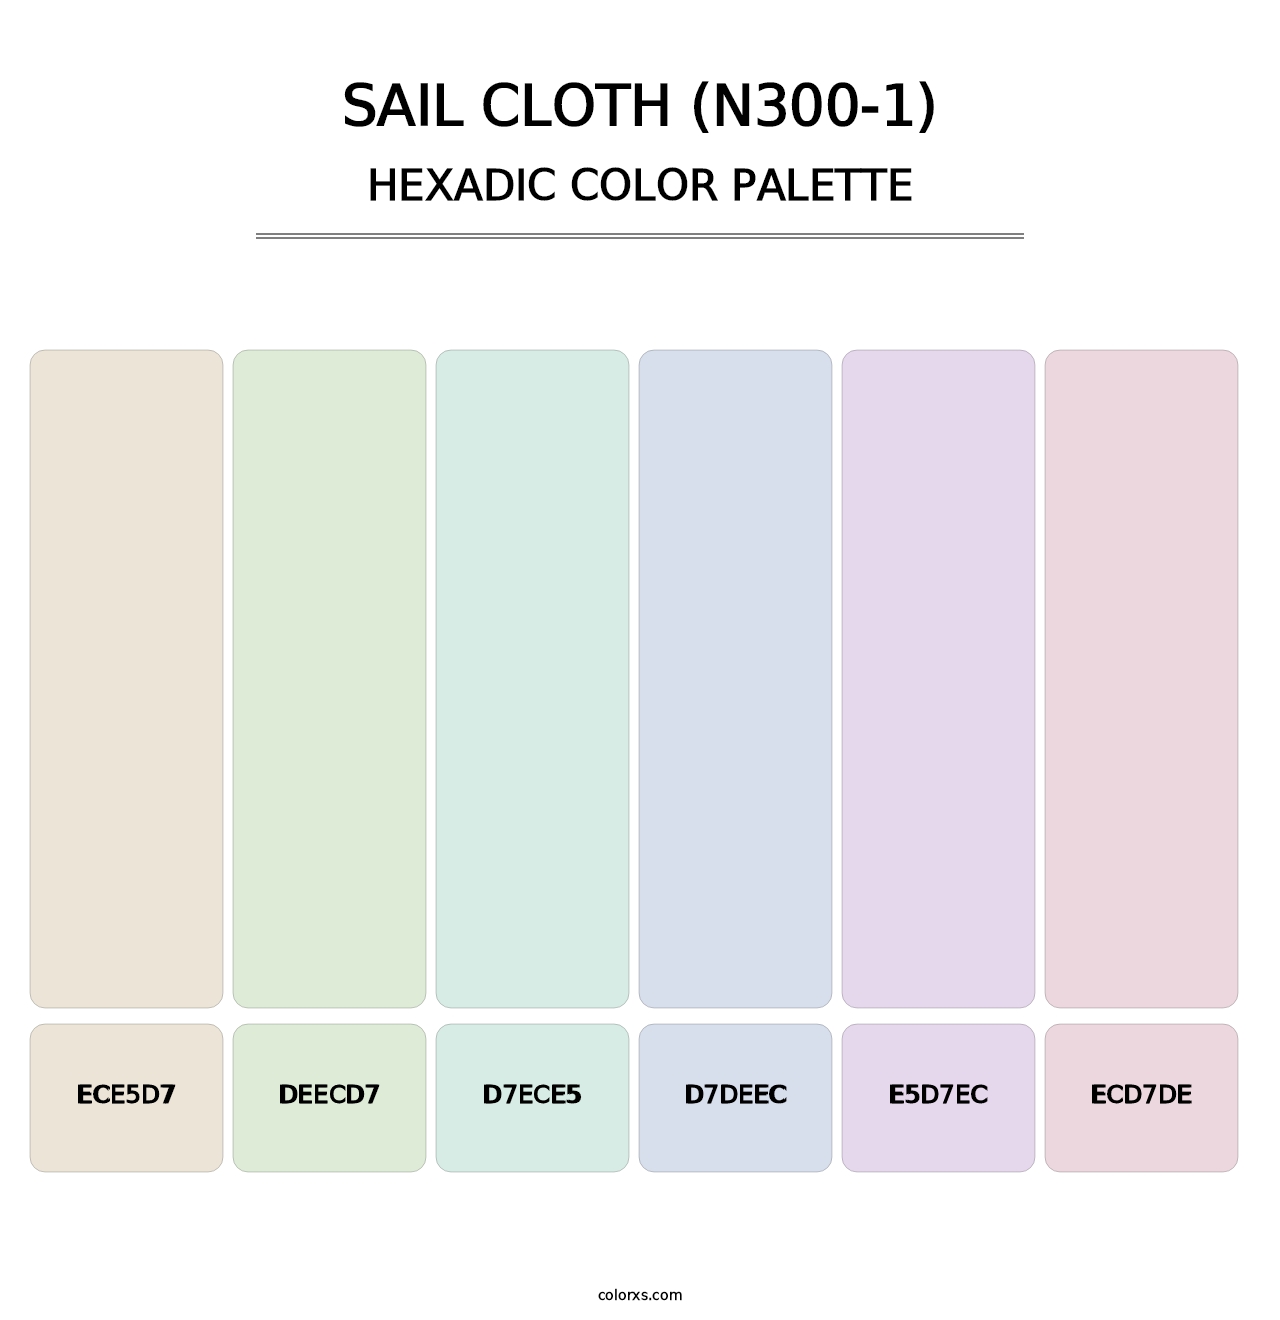 Sail Cloth (N300-1) - Hexadic Color Palette